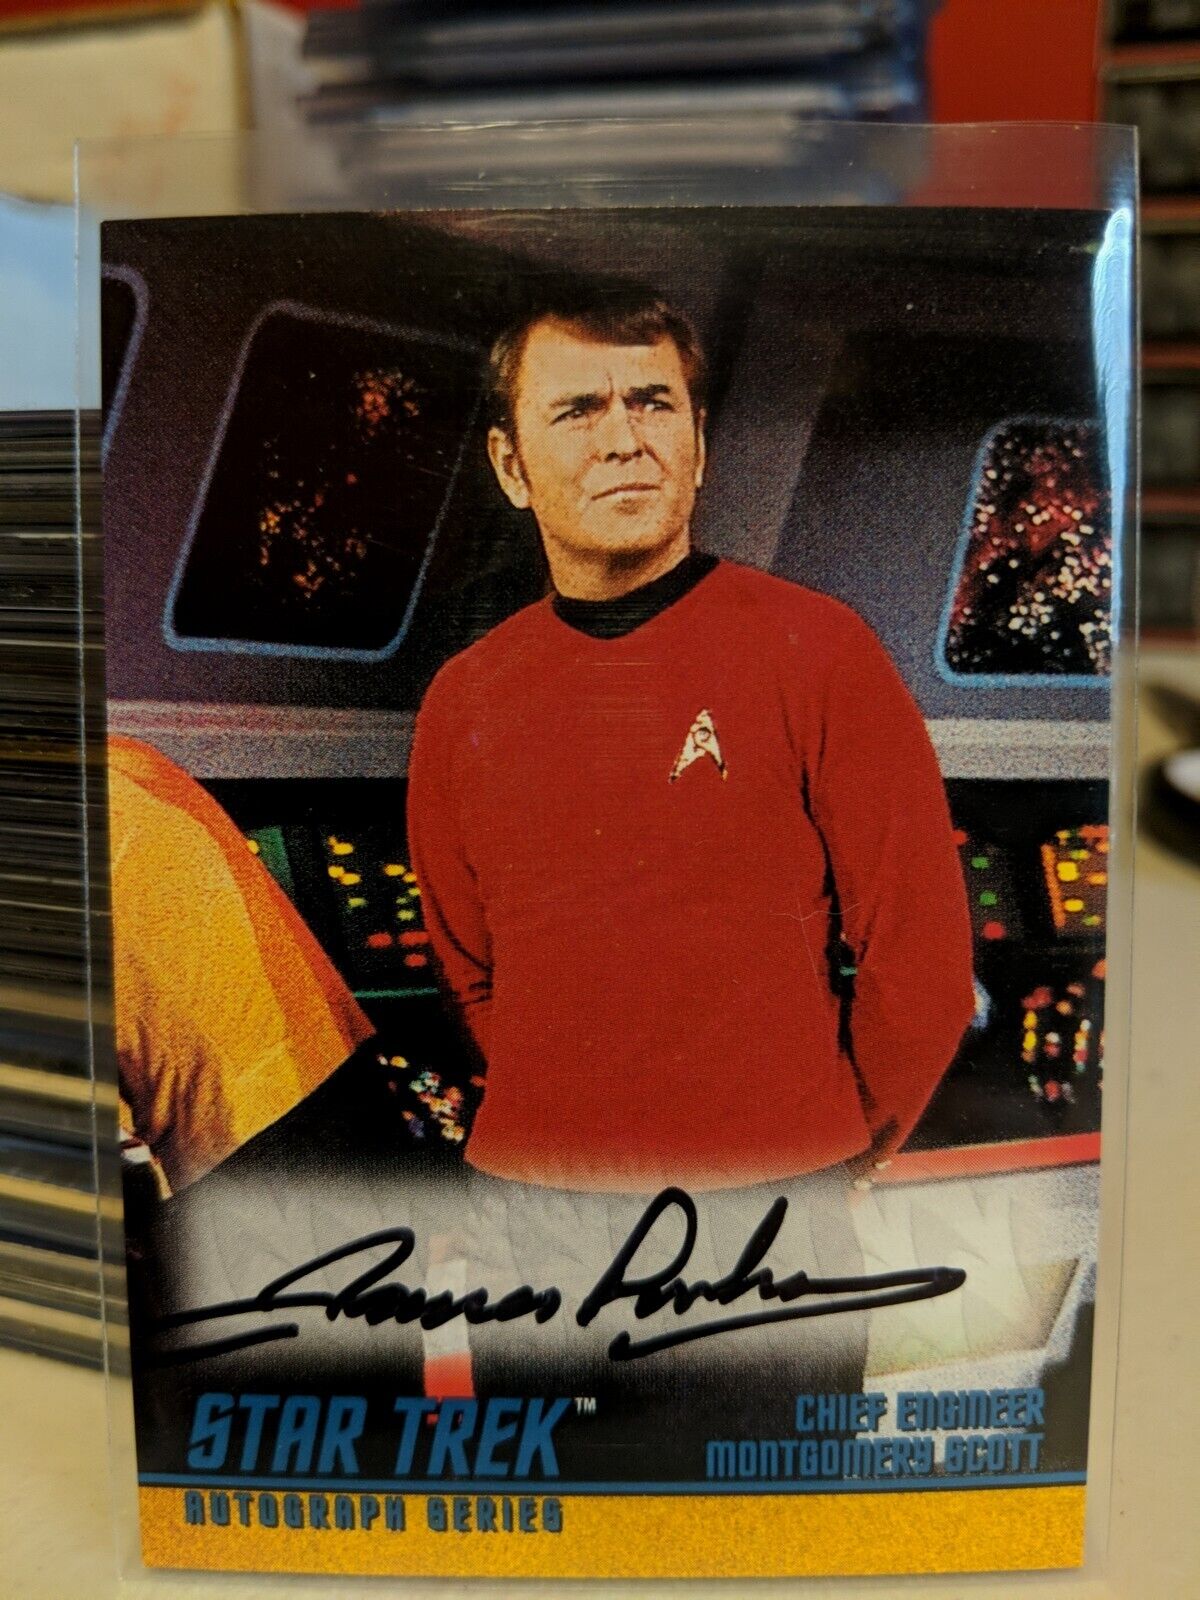 Star Trek TOS Season 2 James Doohan A32 Autograph Card as Scotty 1998 NM+ d 2005